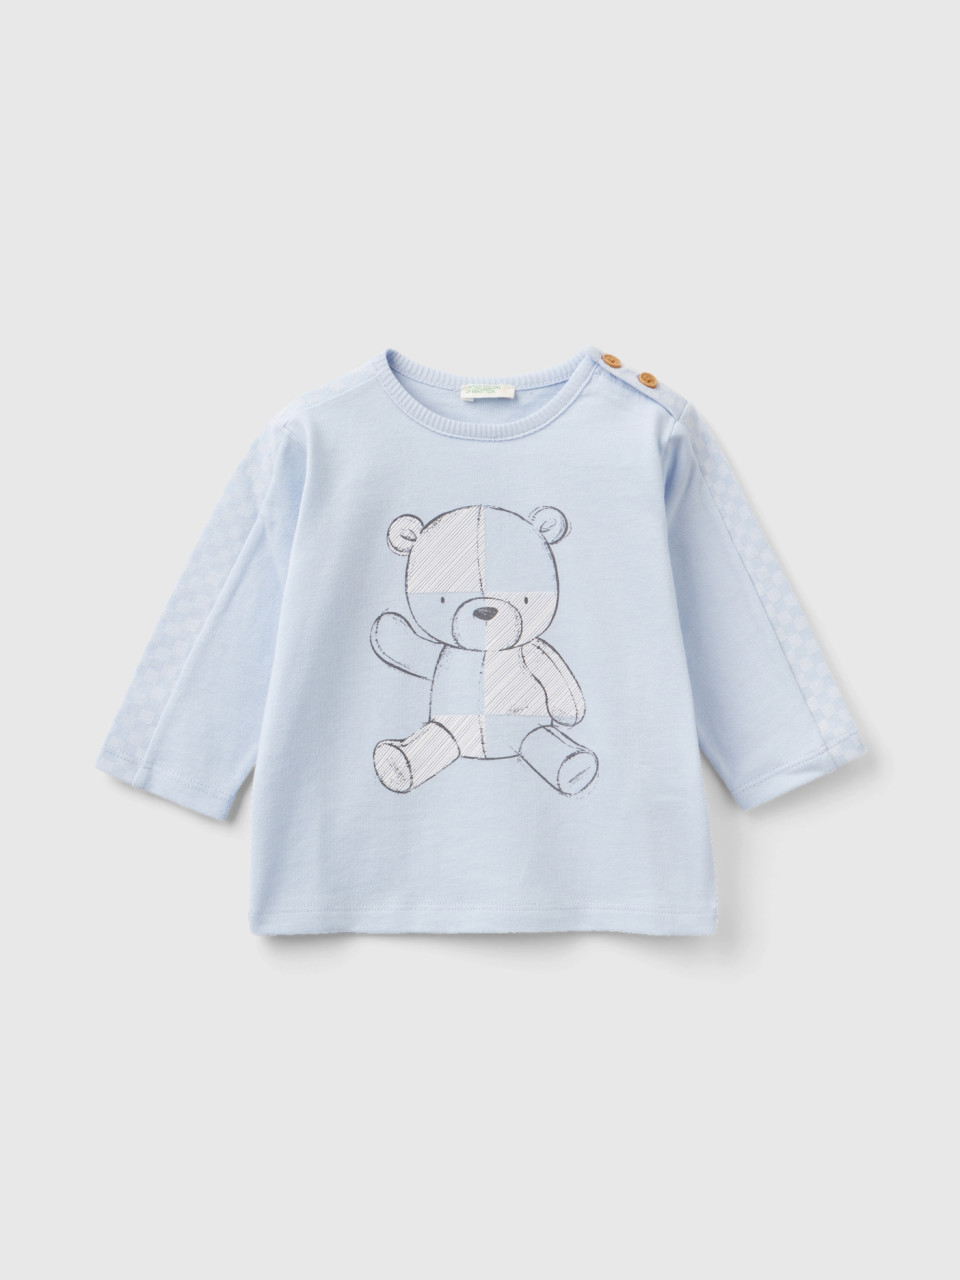 Benetton, Optical T-shirt With Teddy Bear Print, Sky Blue, Kids